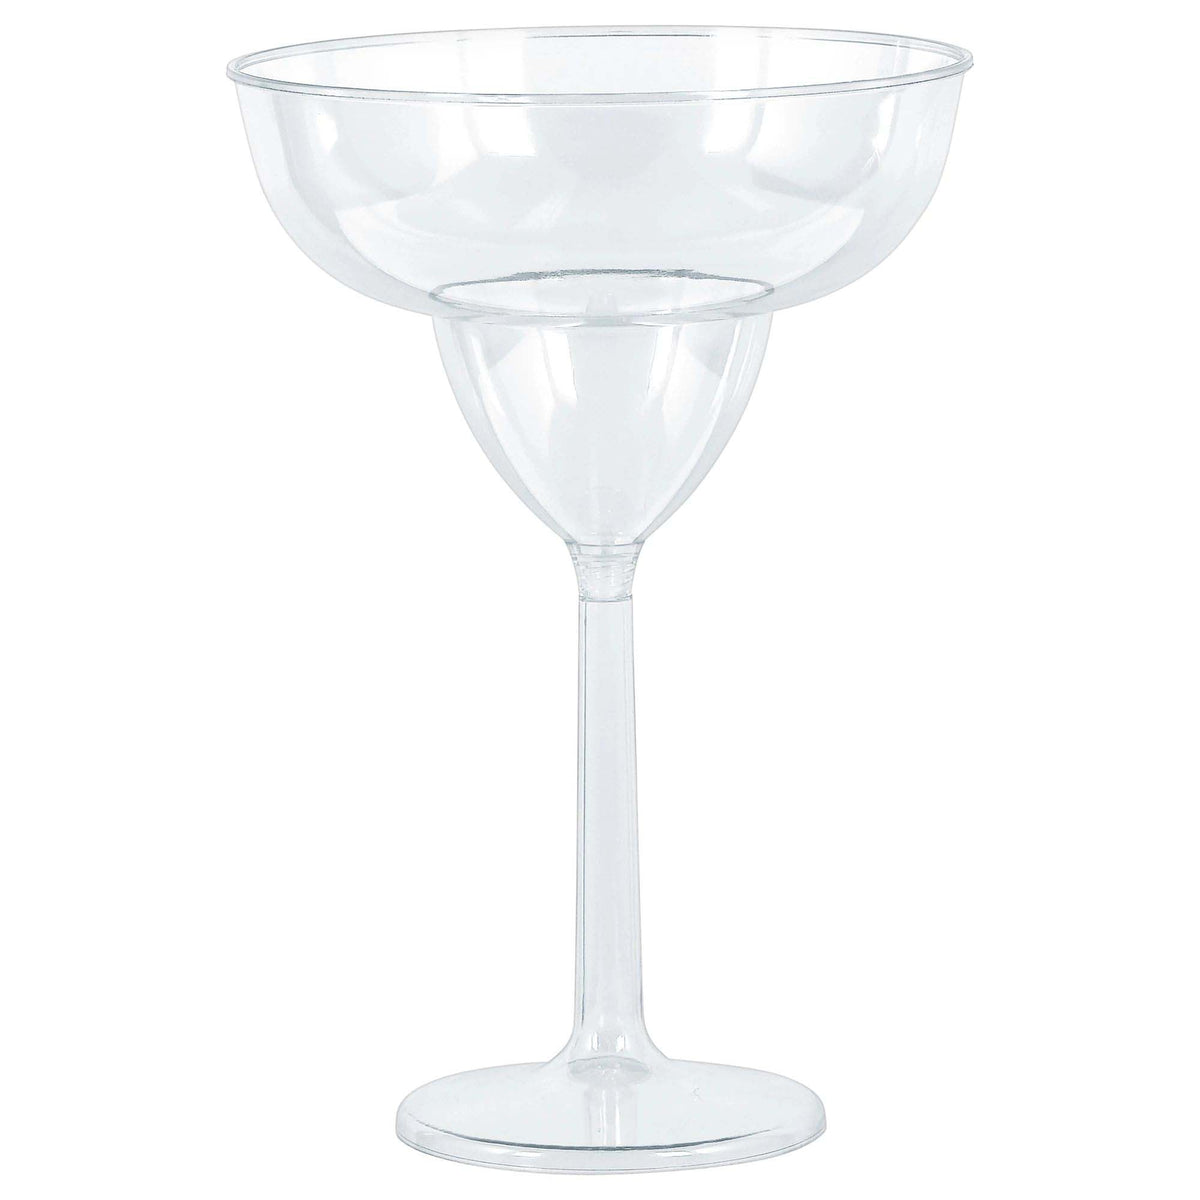 AMSCAN CA Disposable-Plasticware Clear Jumbo Margarita Plastic Glasses, 30 Oz, 4 Count 192937317372